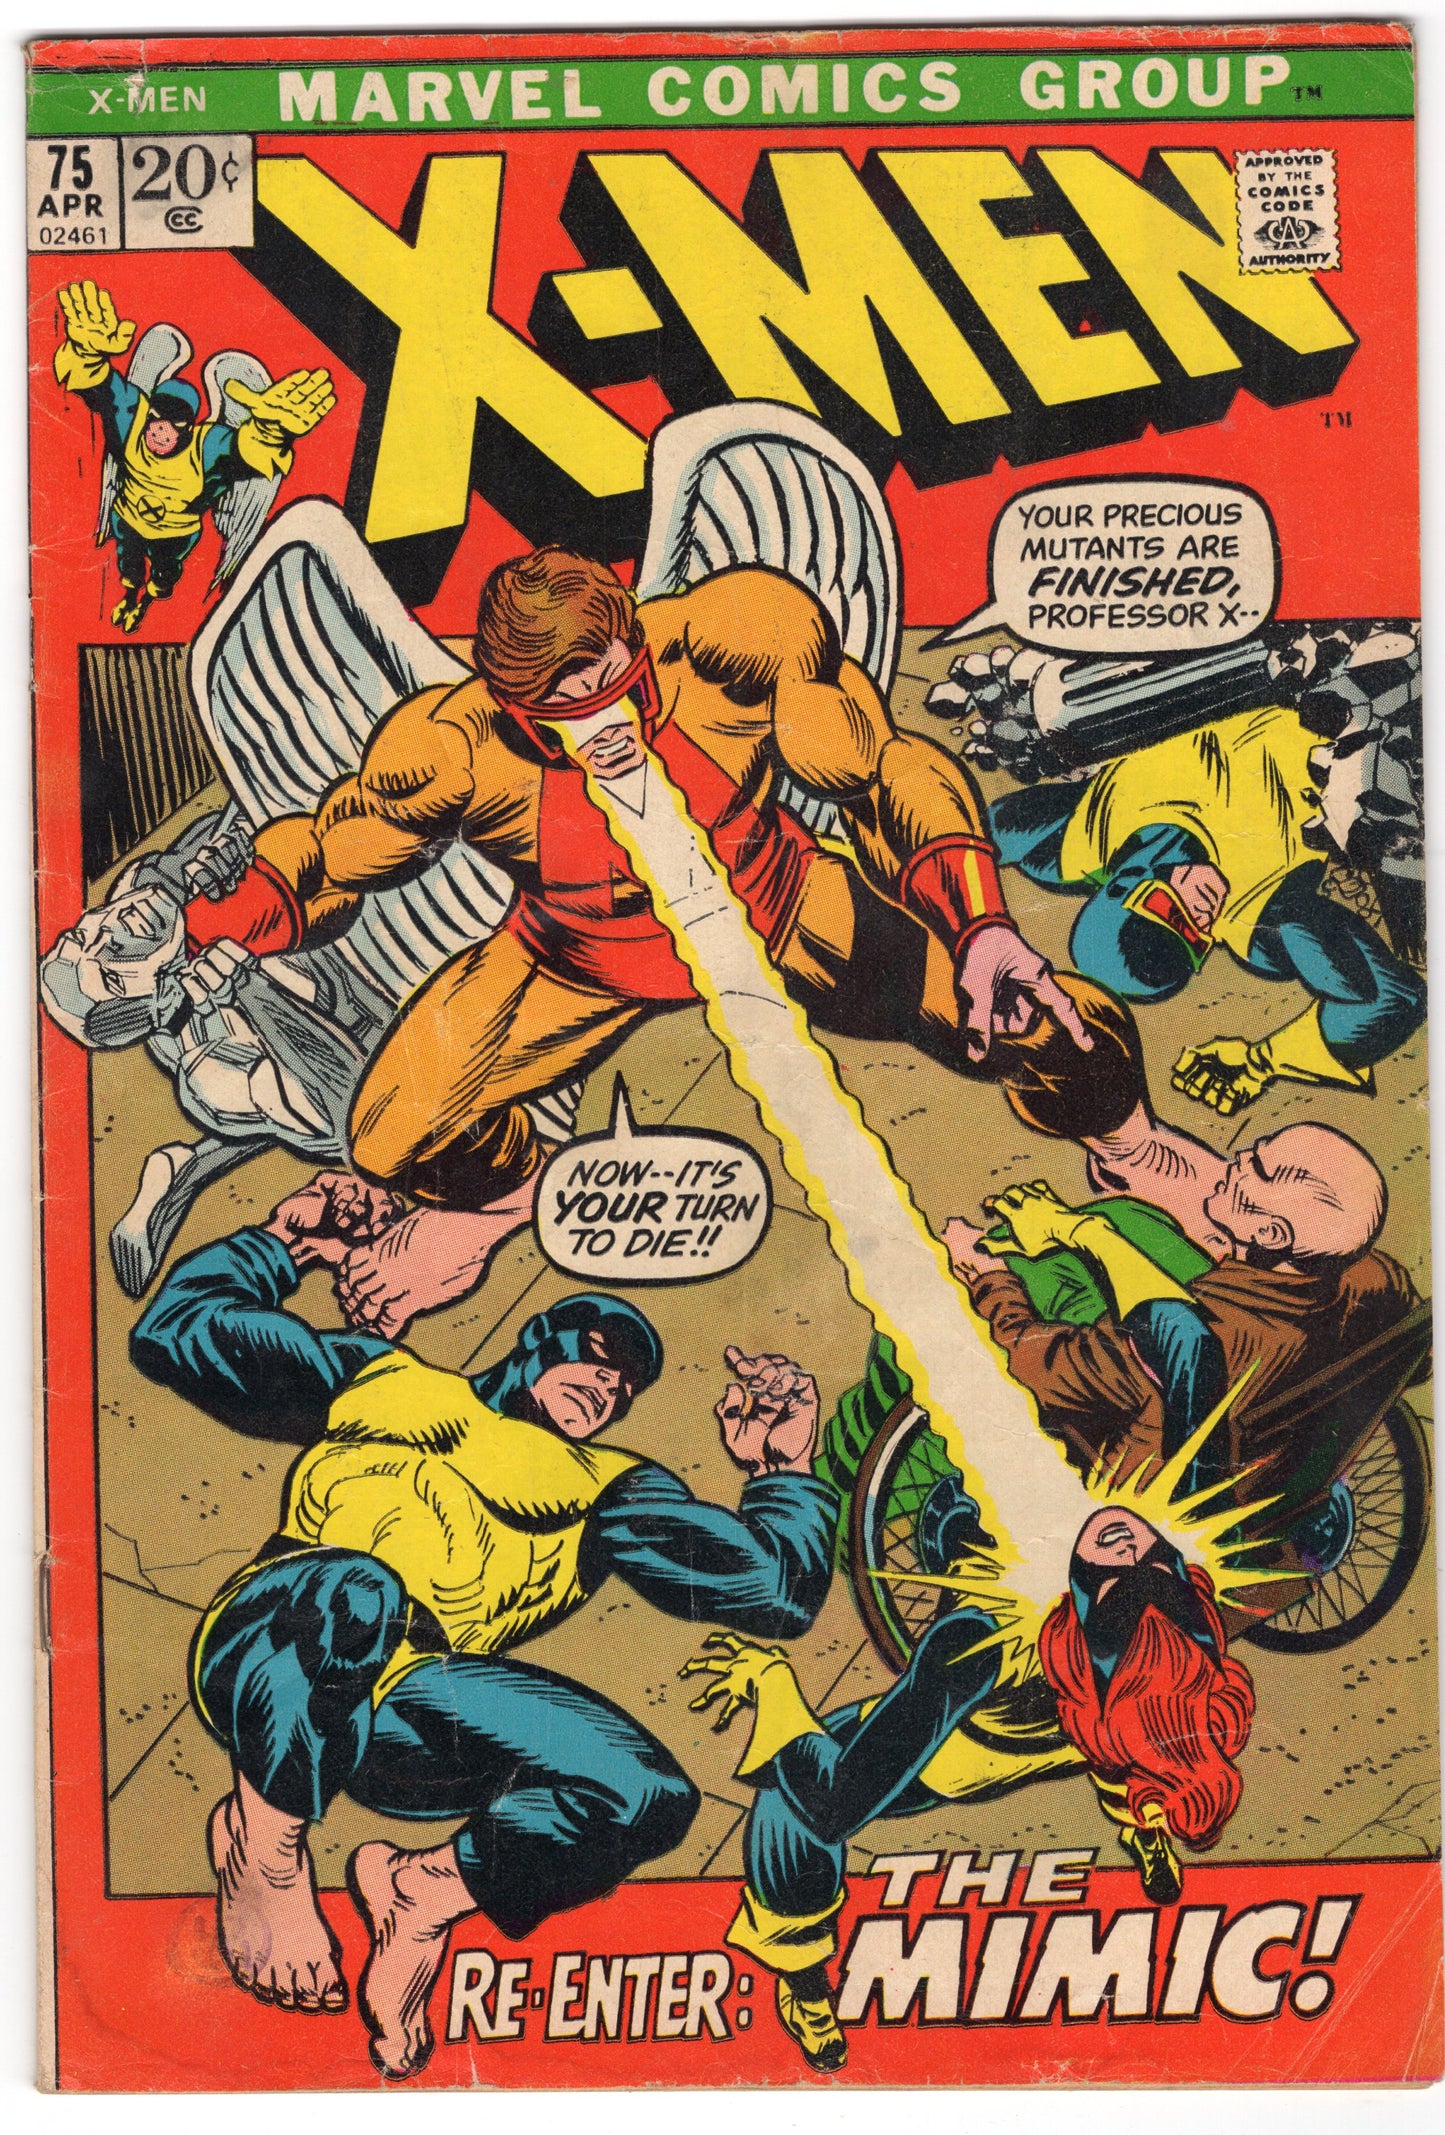 X-Men Issue #75 "Re-Enter: The Mimic!" (April, 1972 - Marvel Comics) VG